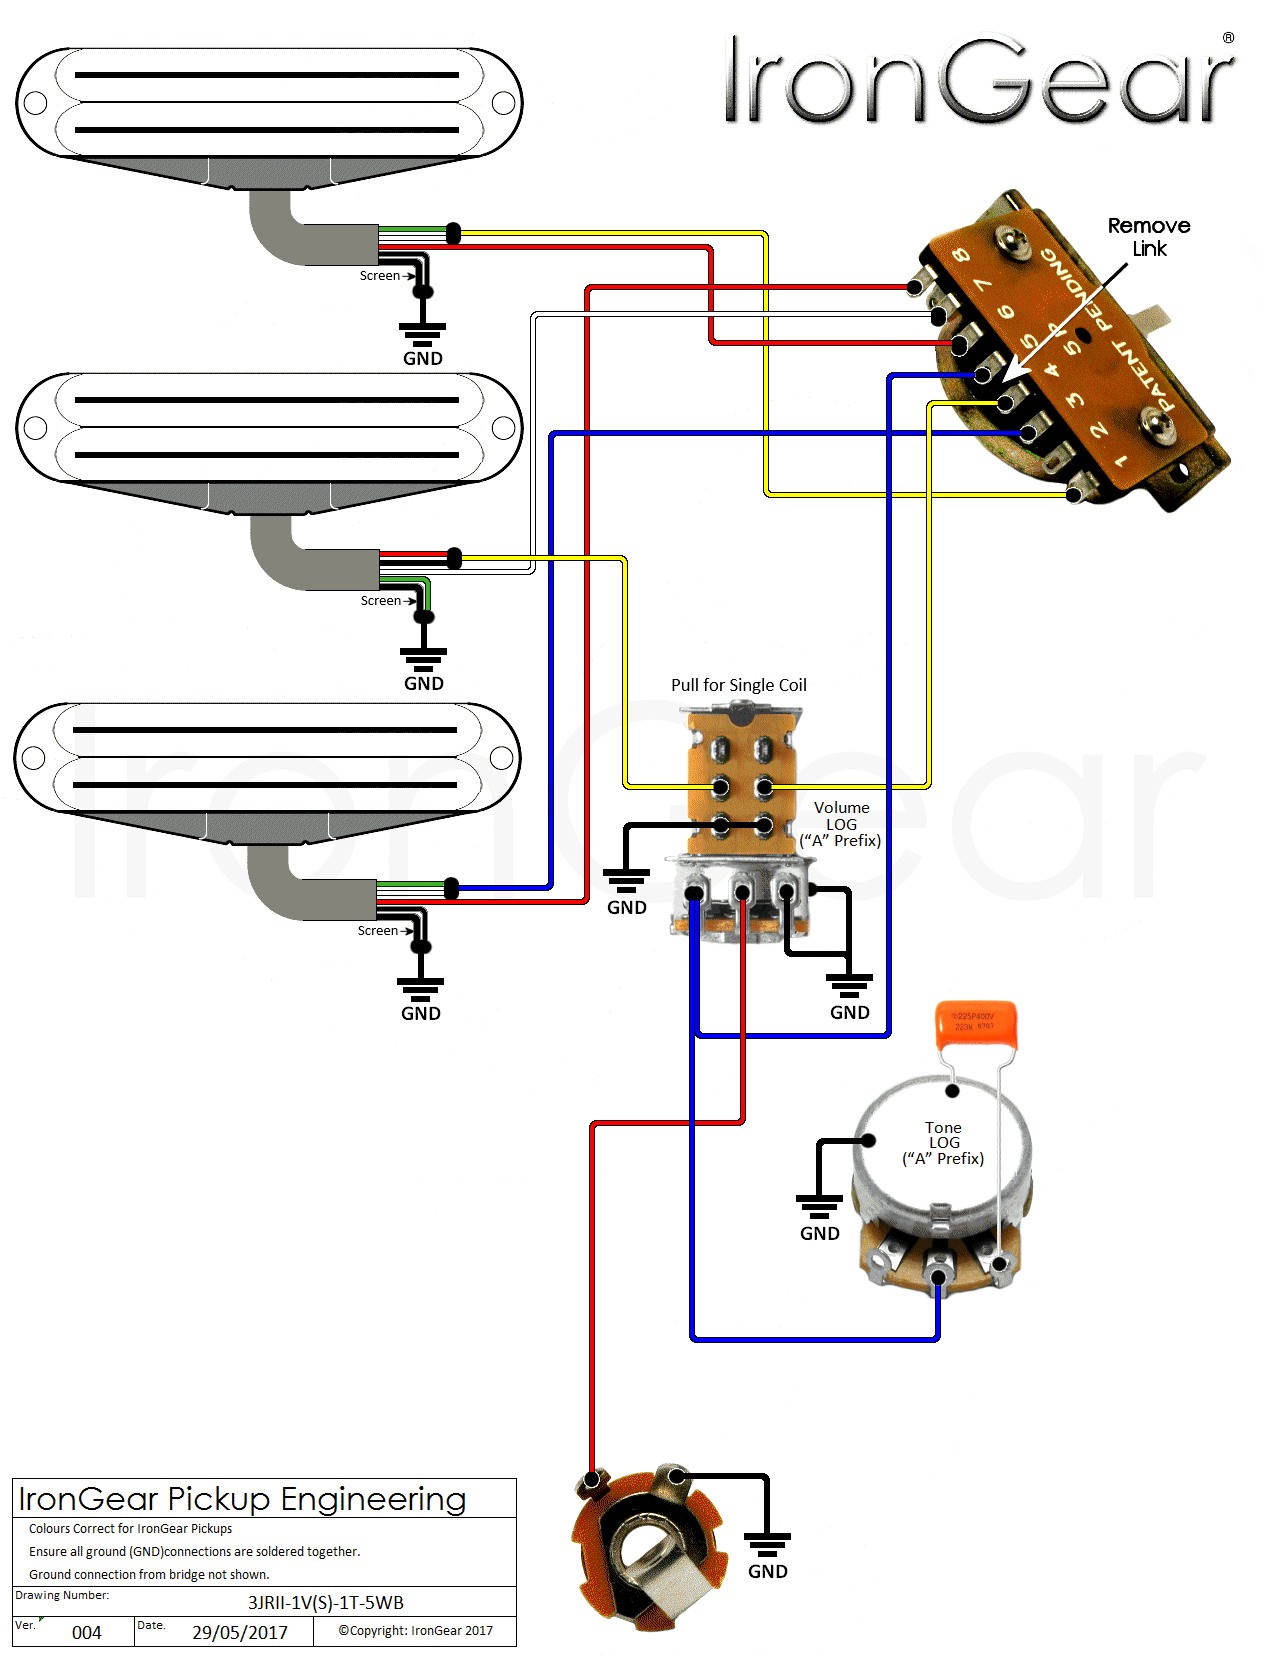 Basic Strat Wiring Diagram from www.irongear.co.uk